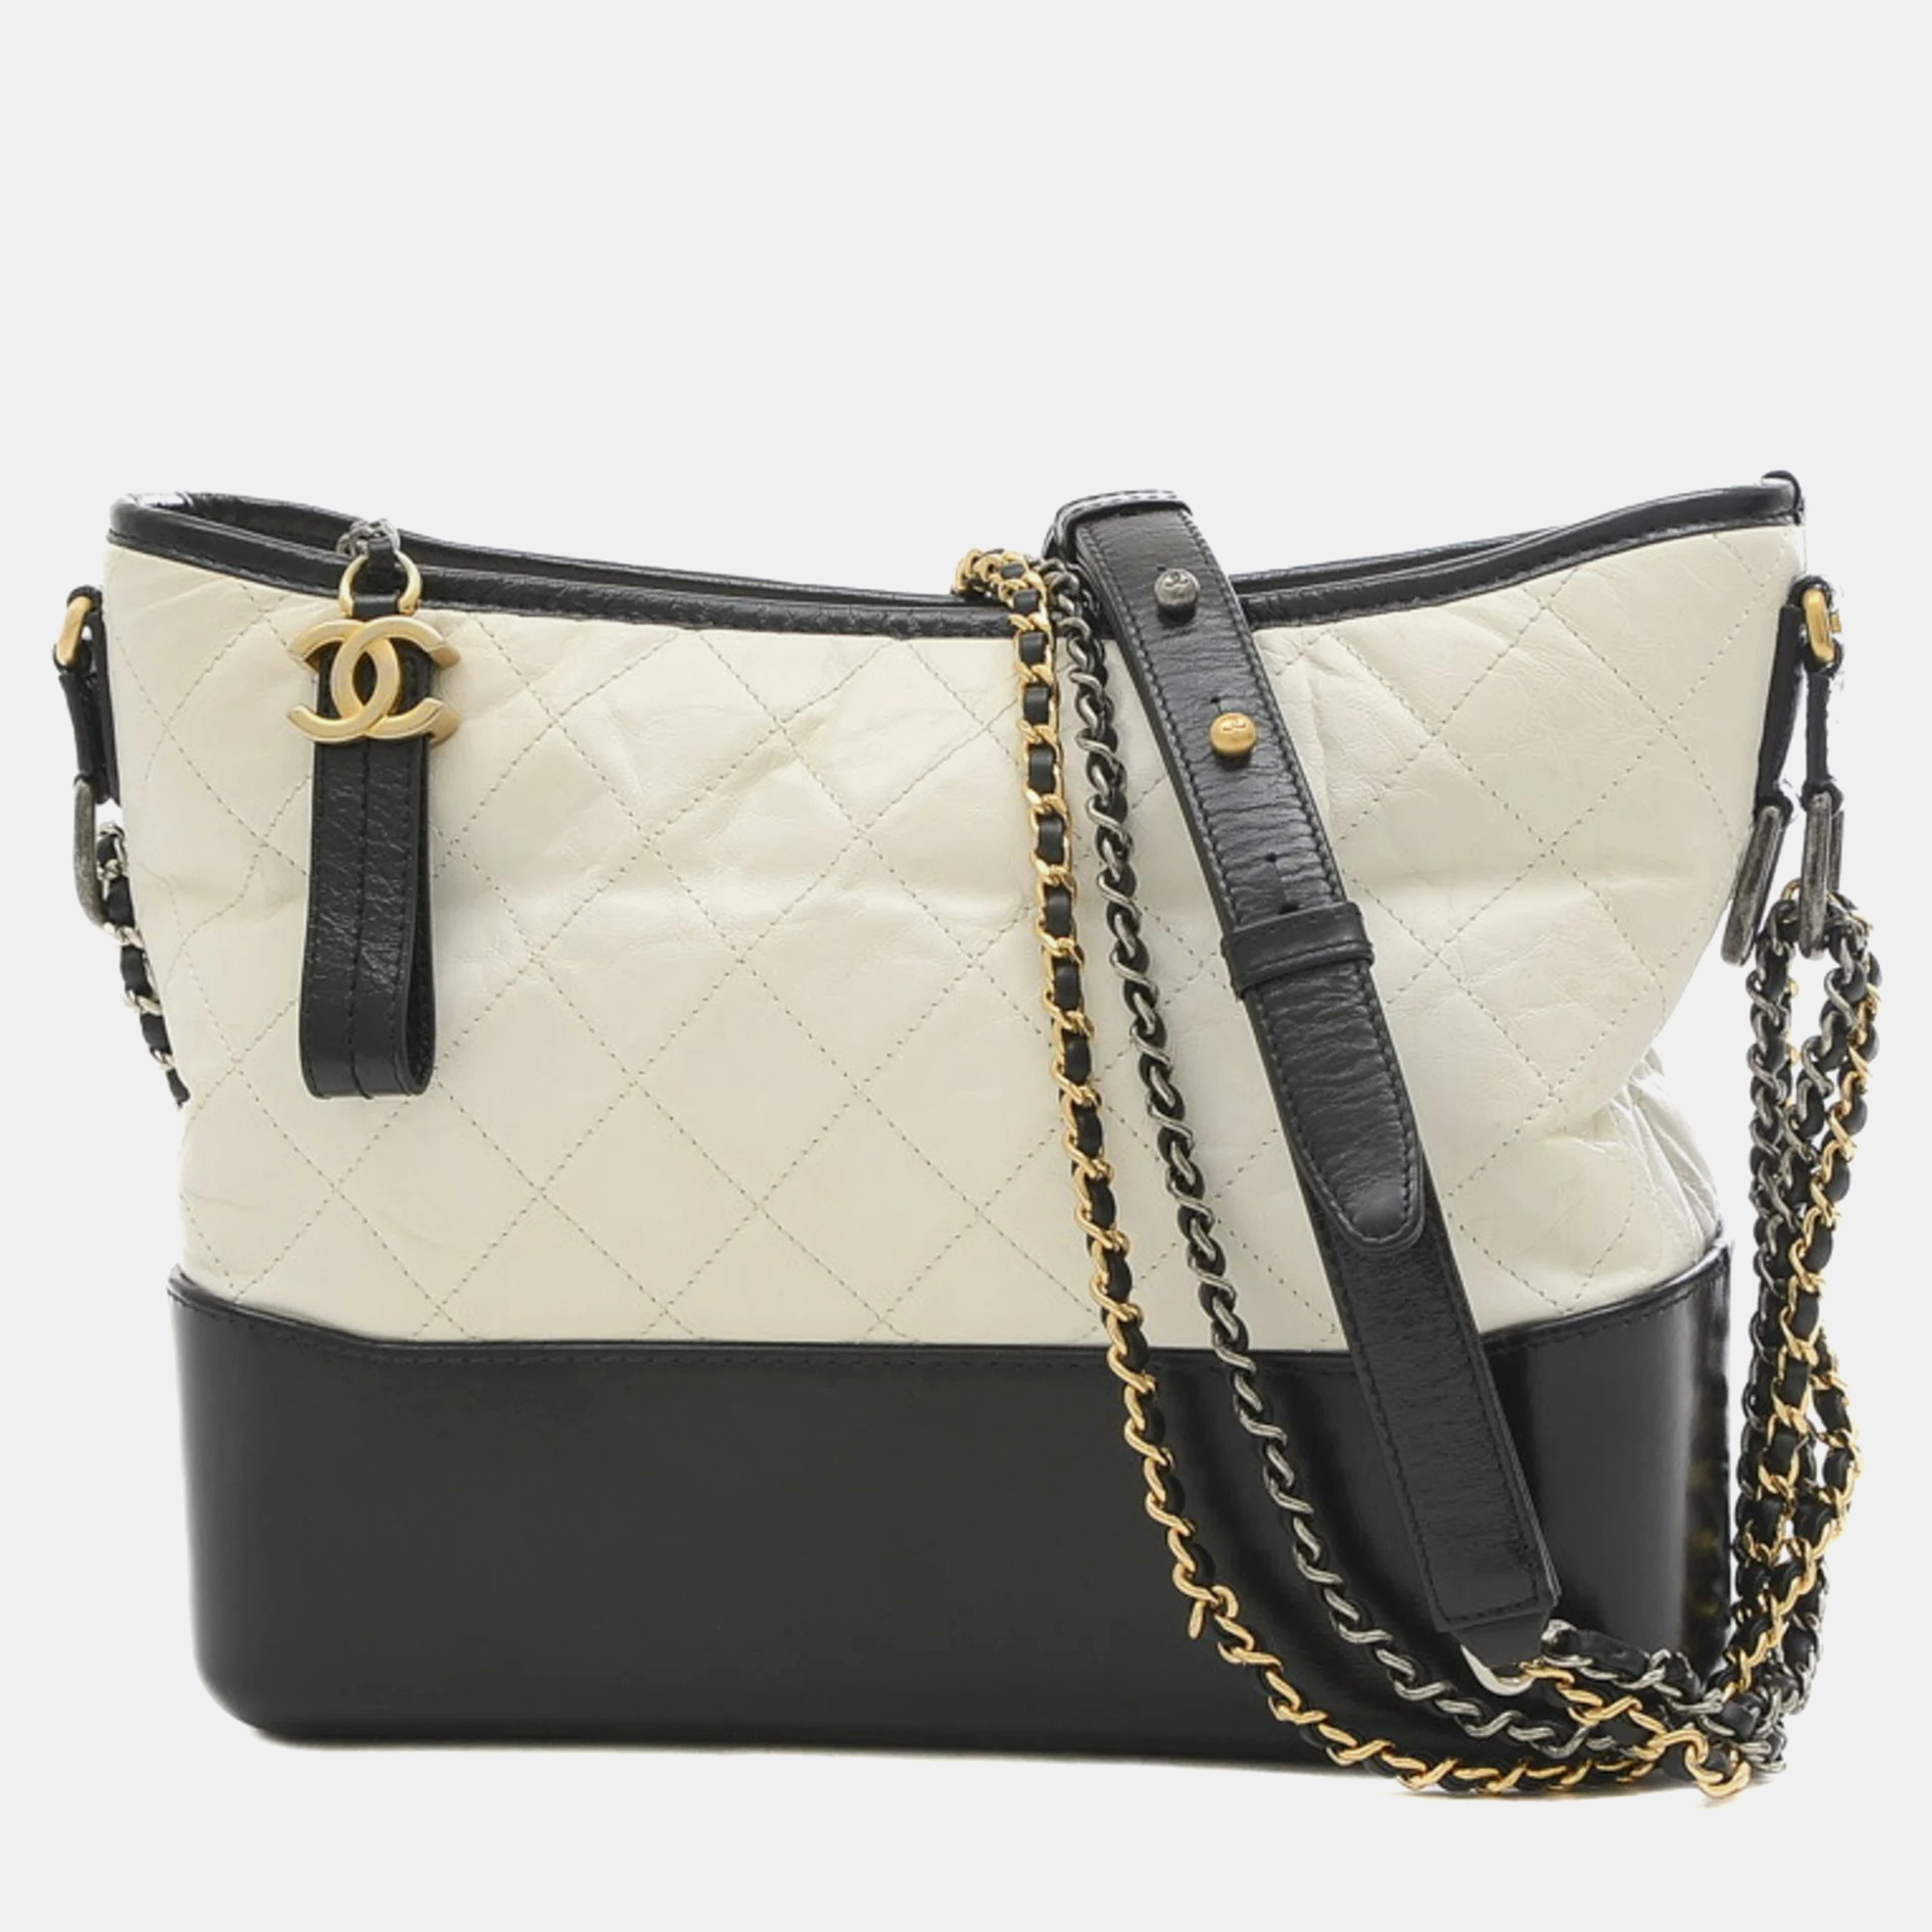 Chanel black/white leather large gabrielle shoulder bags